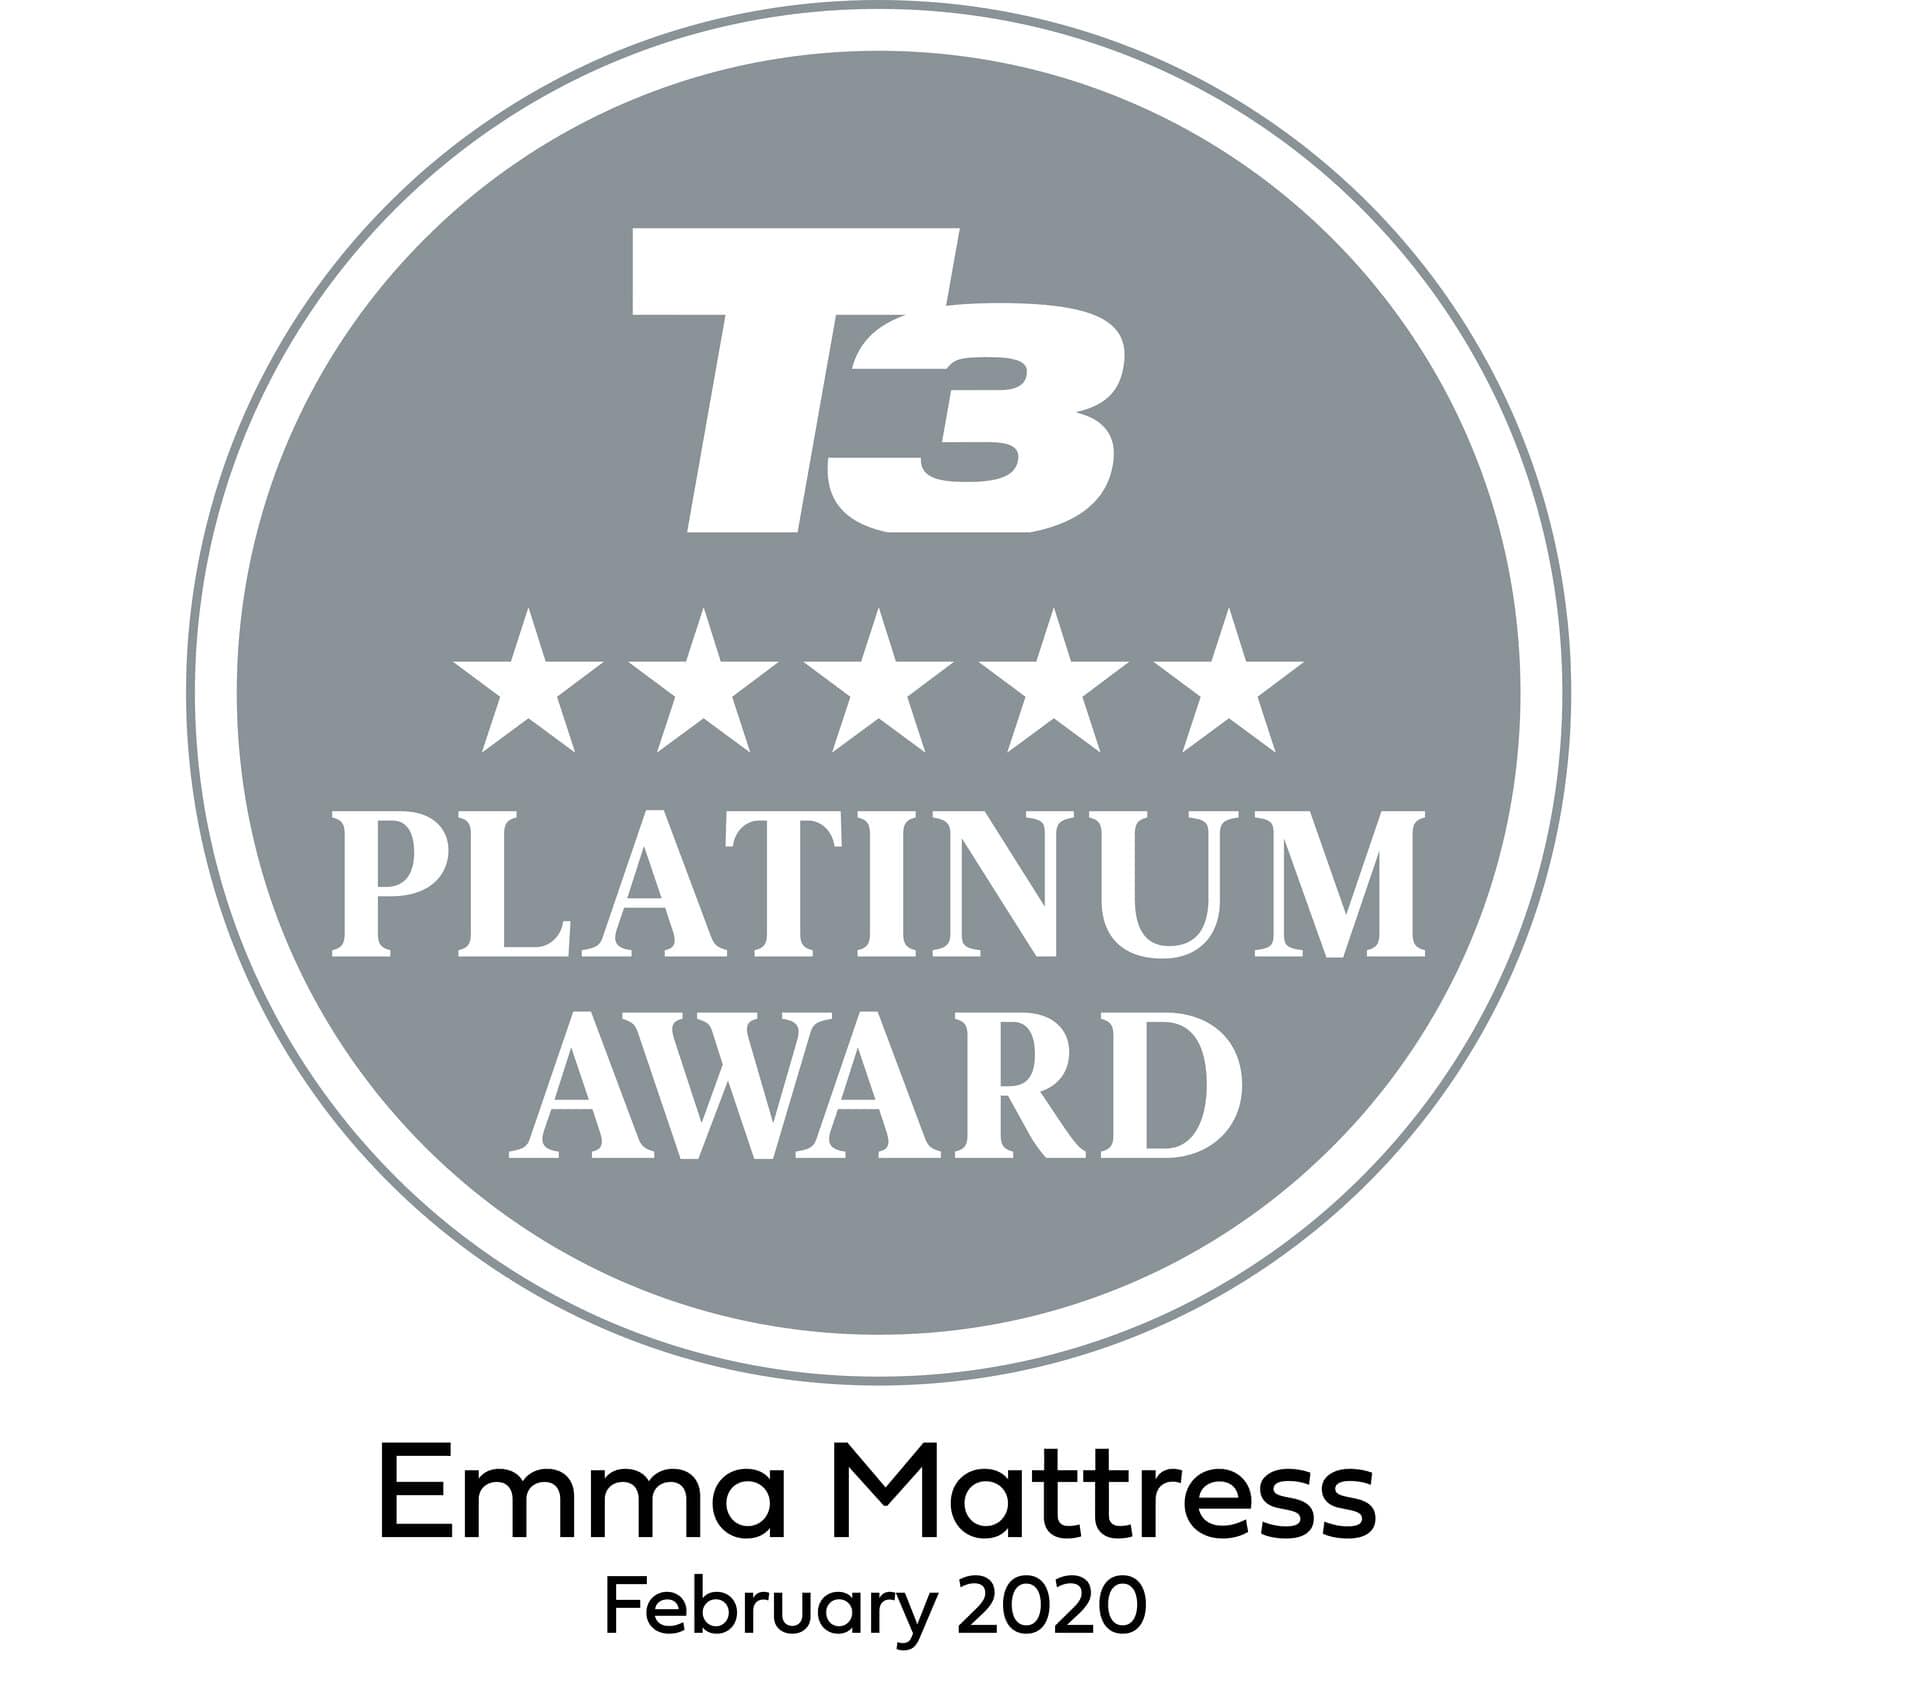 T3 platinum award for Emma Mattress 